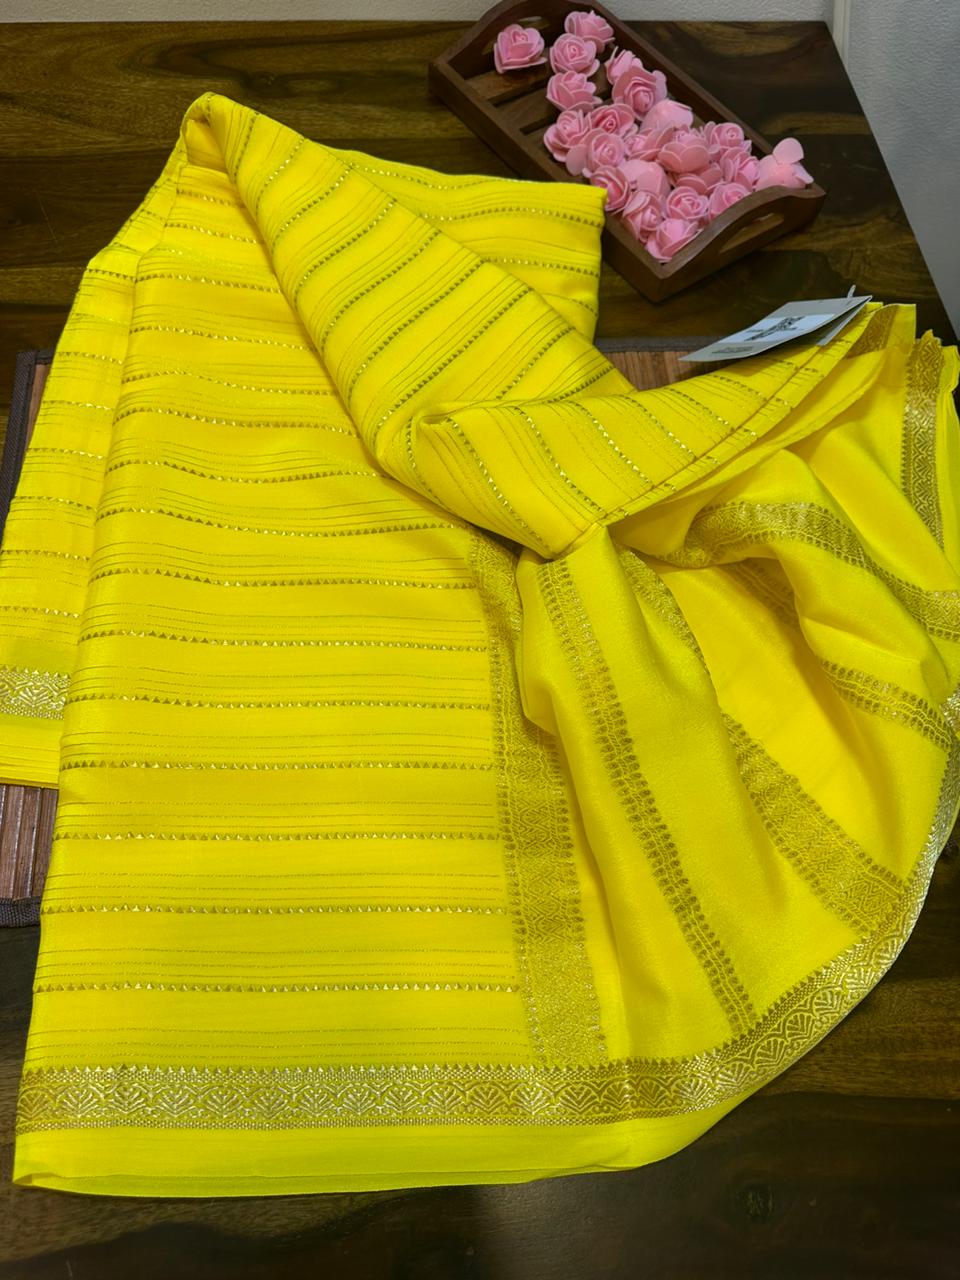 Pure mysore silk sarees with pure real gold and real silver zari saree